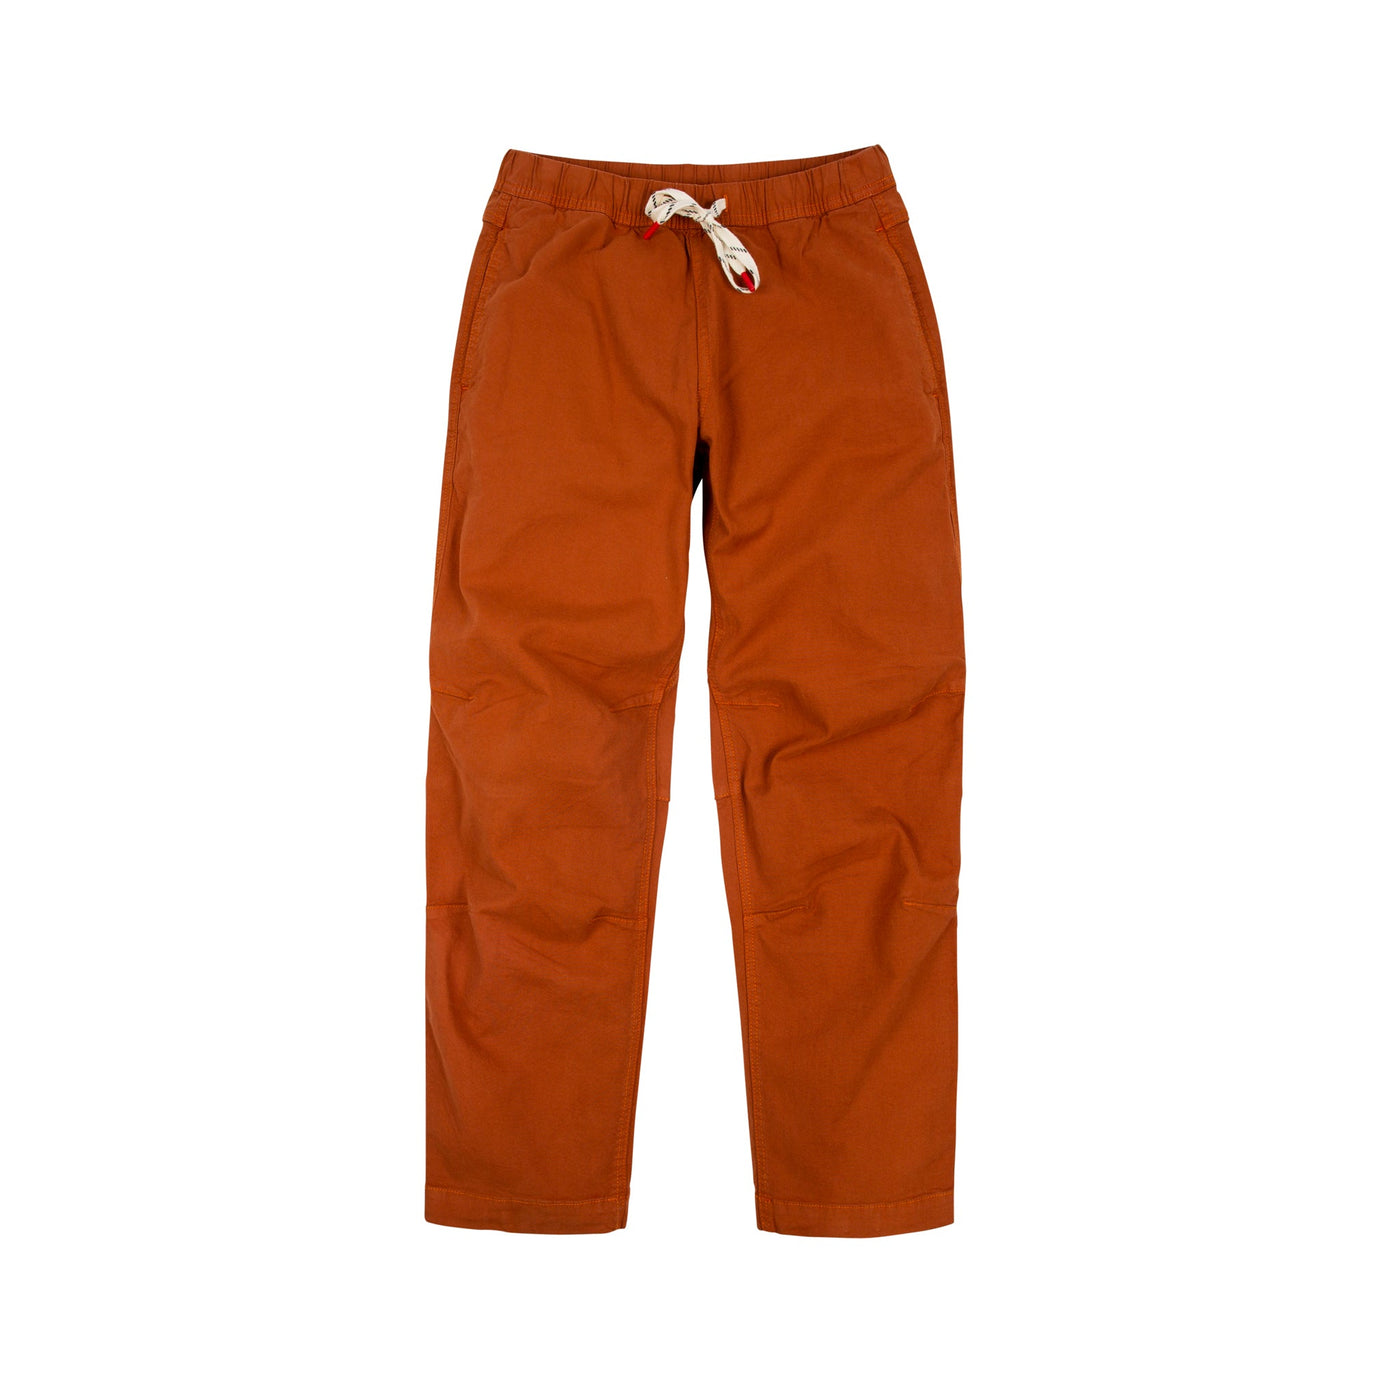 Front product shot of Topo Designs Women's Dirt Pants in "Brick" orange.